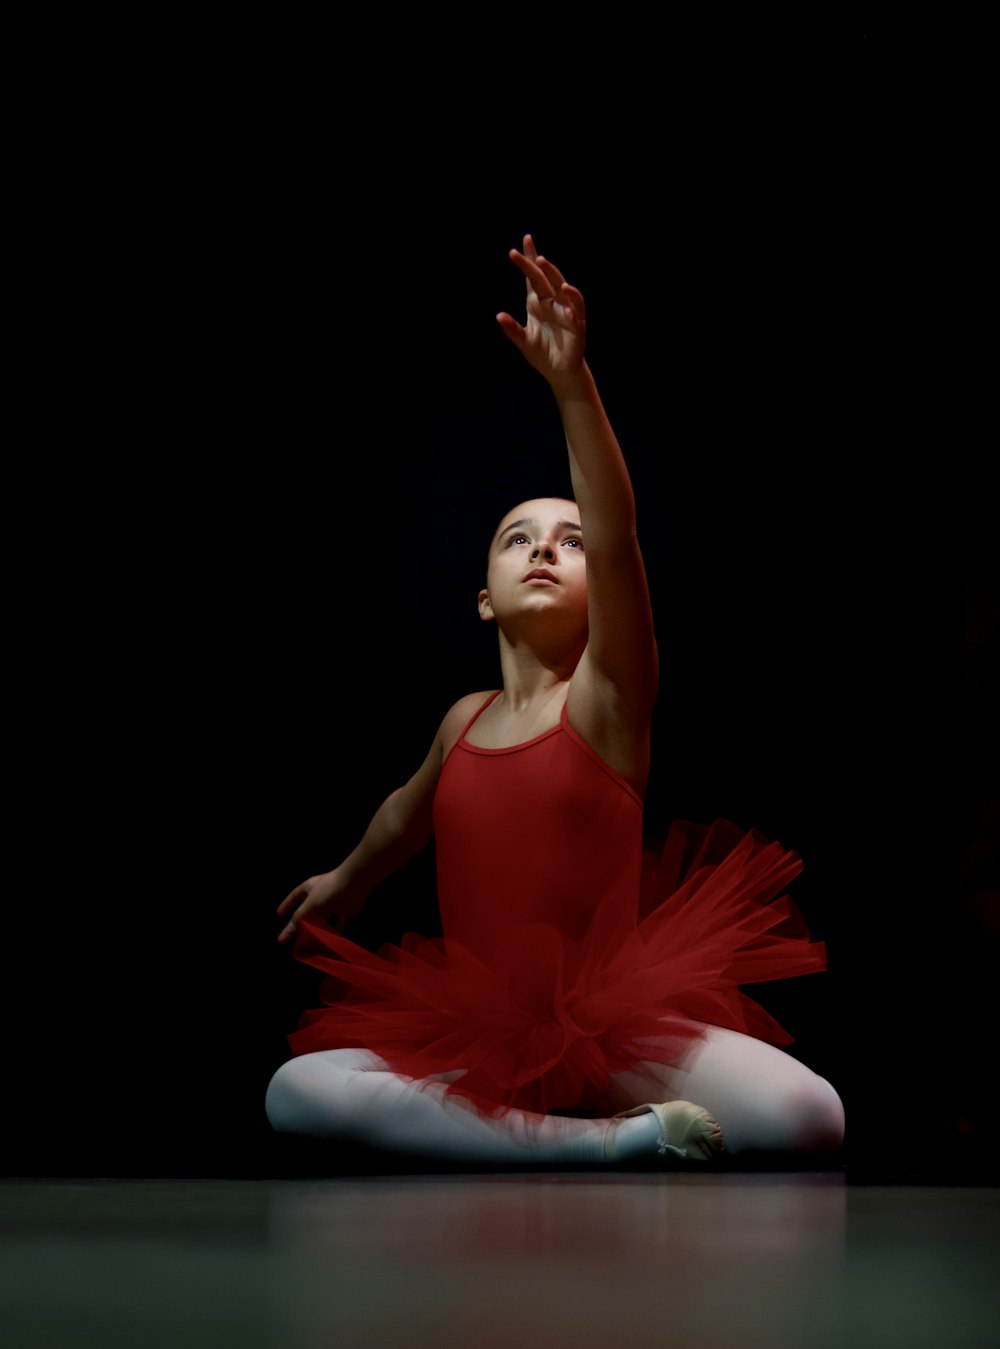 Ballerina in red dress photo – Free Dance Image on Unsplash